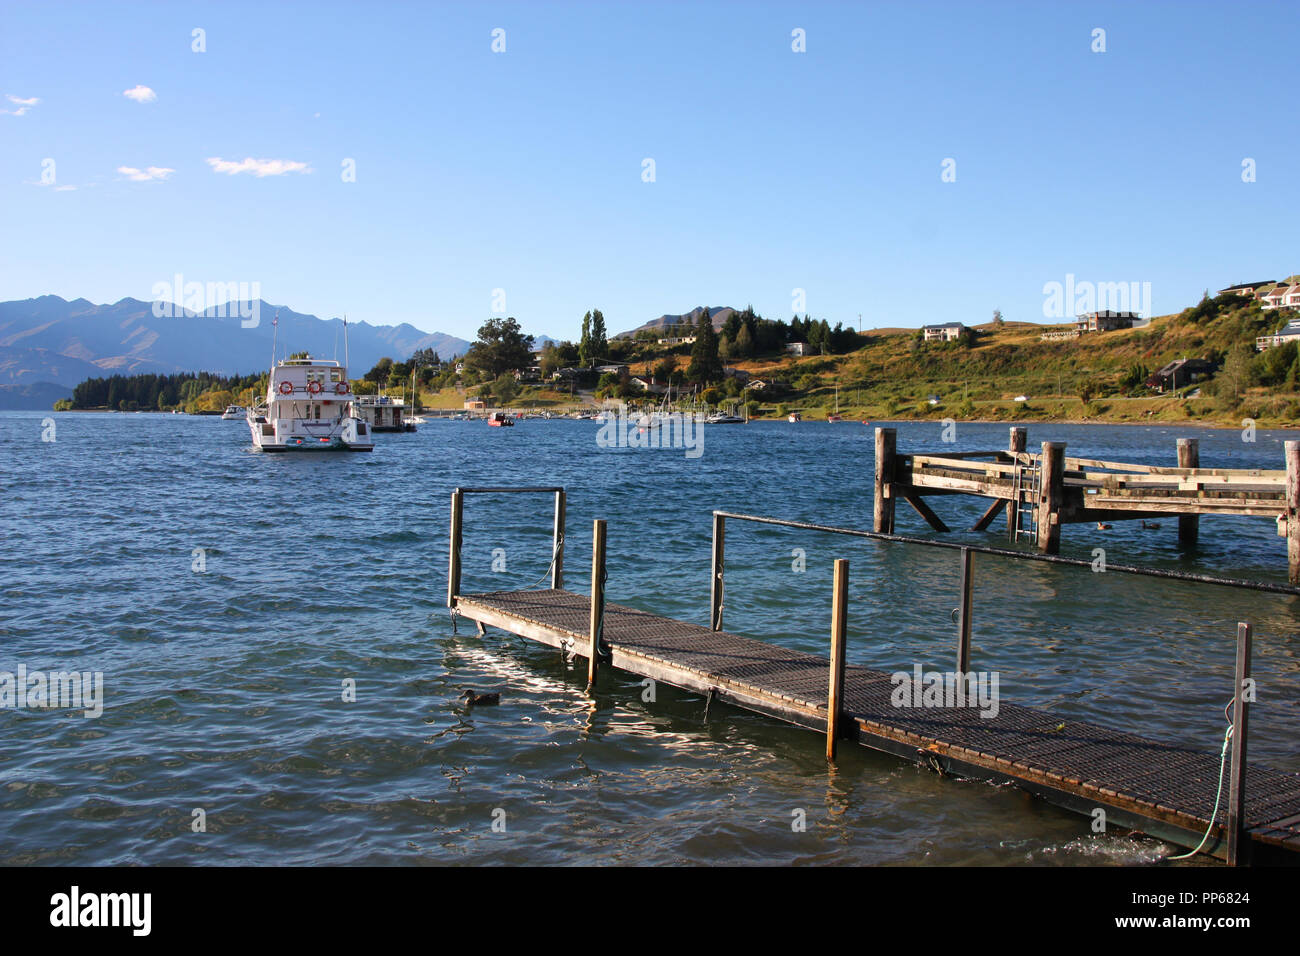 Lake Wanaka in Otago region of New Zealand. Beautiful peaceful morning landscape. Stock Photo